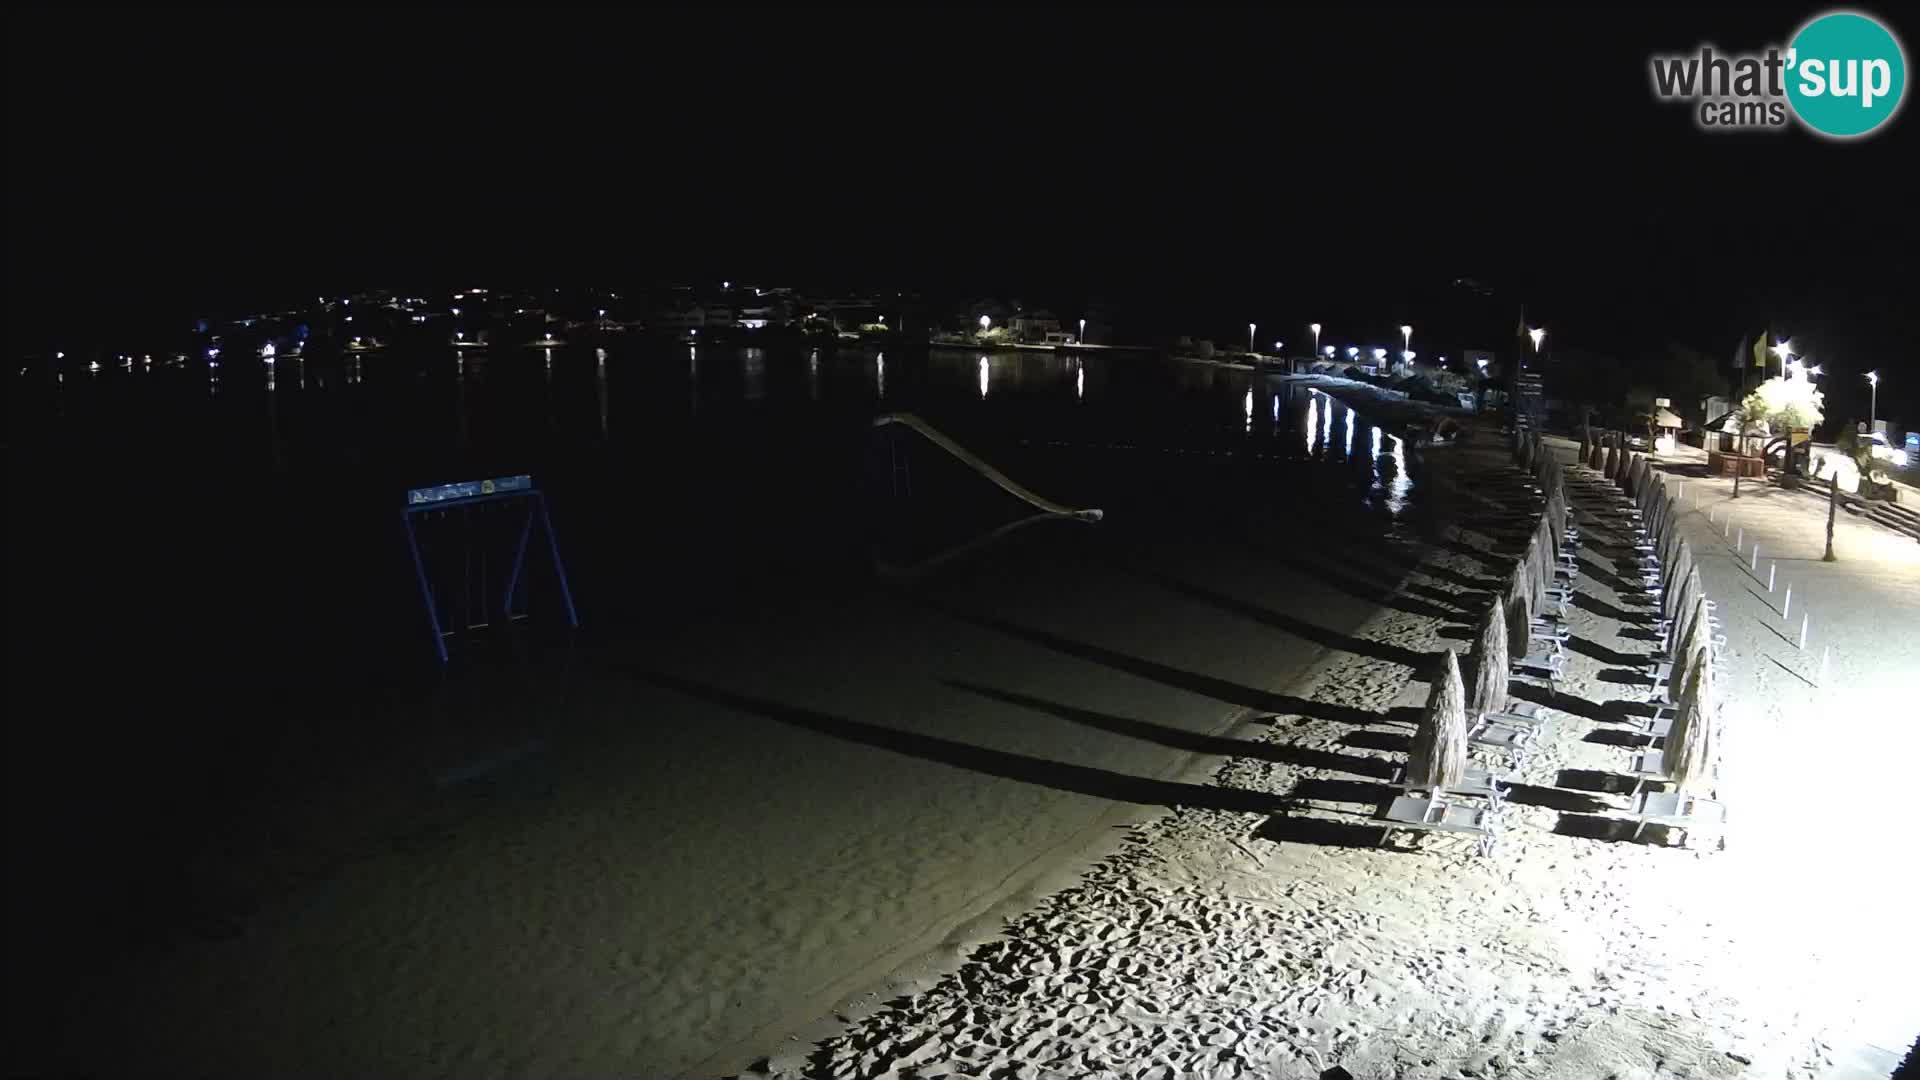 Kamera v zivo – Plaža Planjka – otok Pag